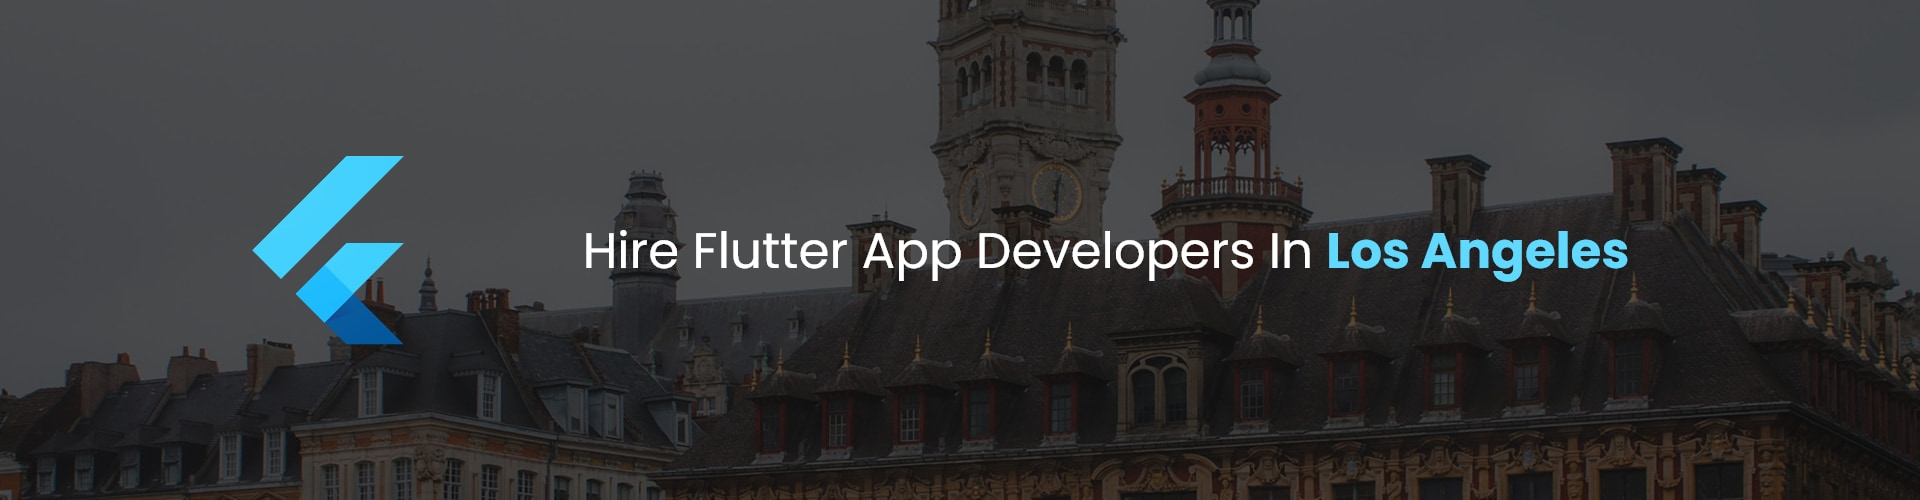 hire flutter app developers in los angeles 